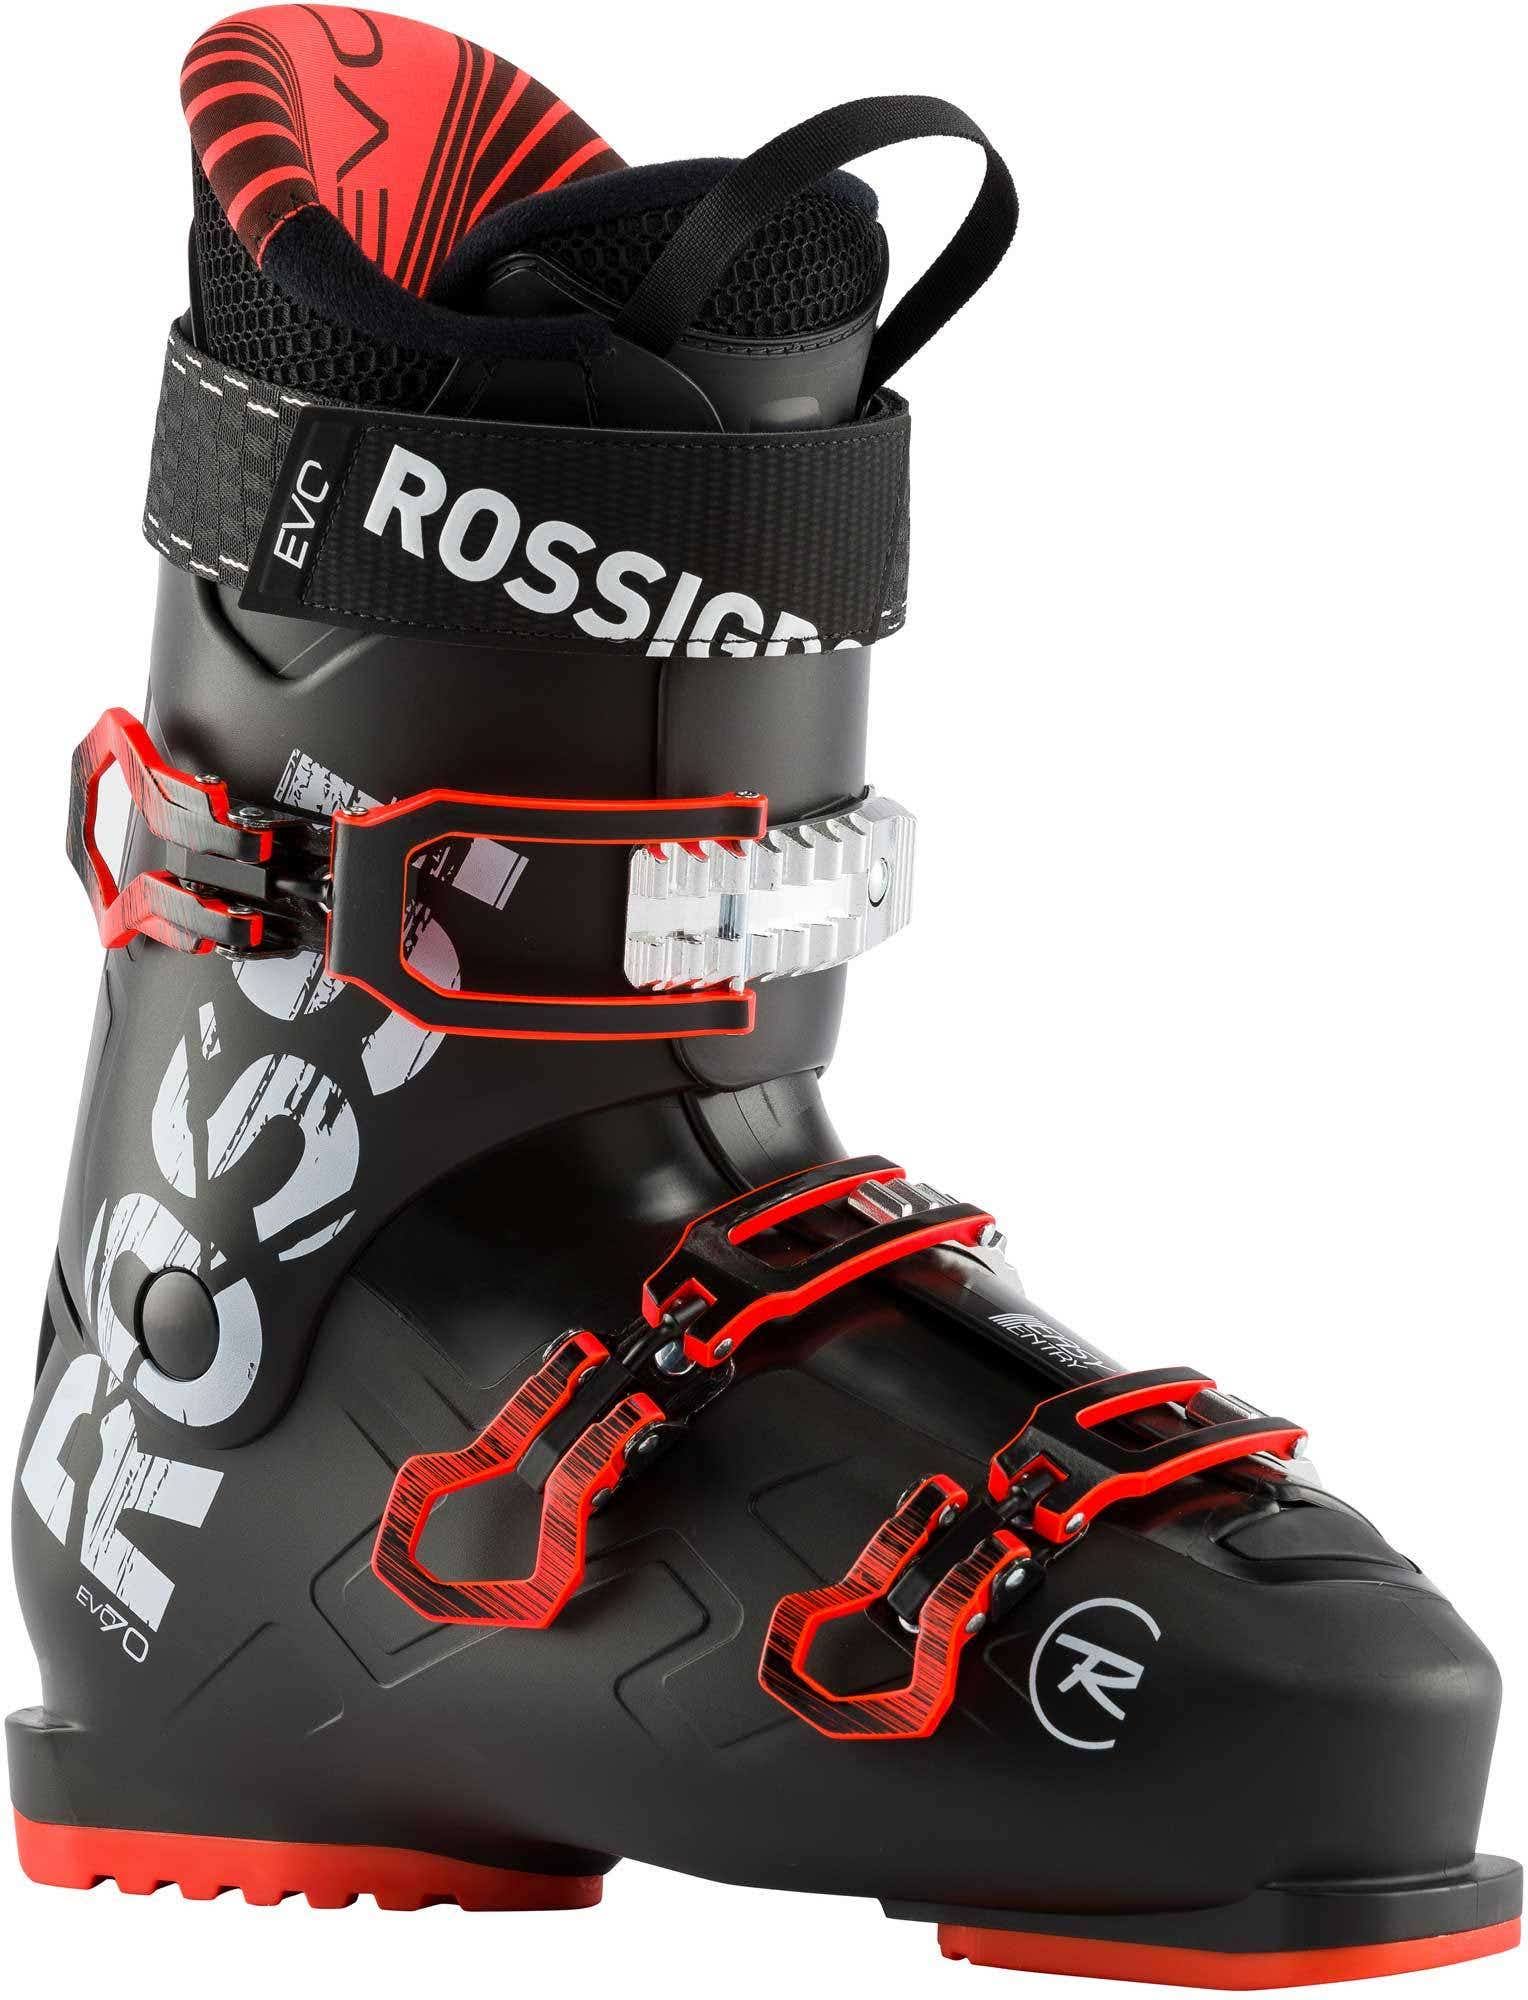 Rossignol - Evo 70 Black/Red - Men's Ski Boots